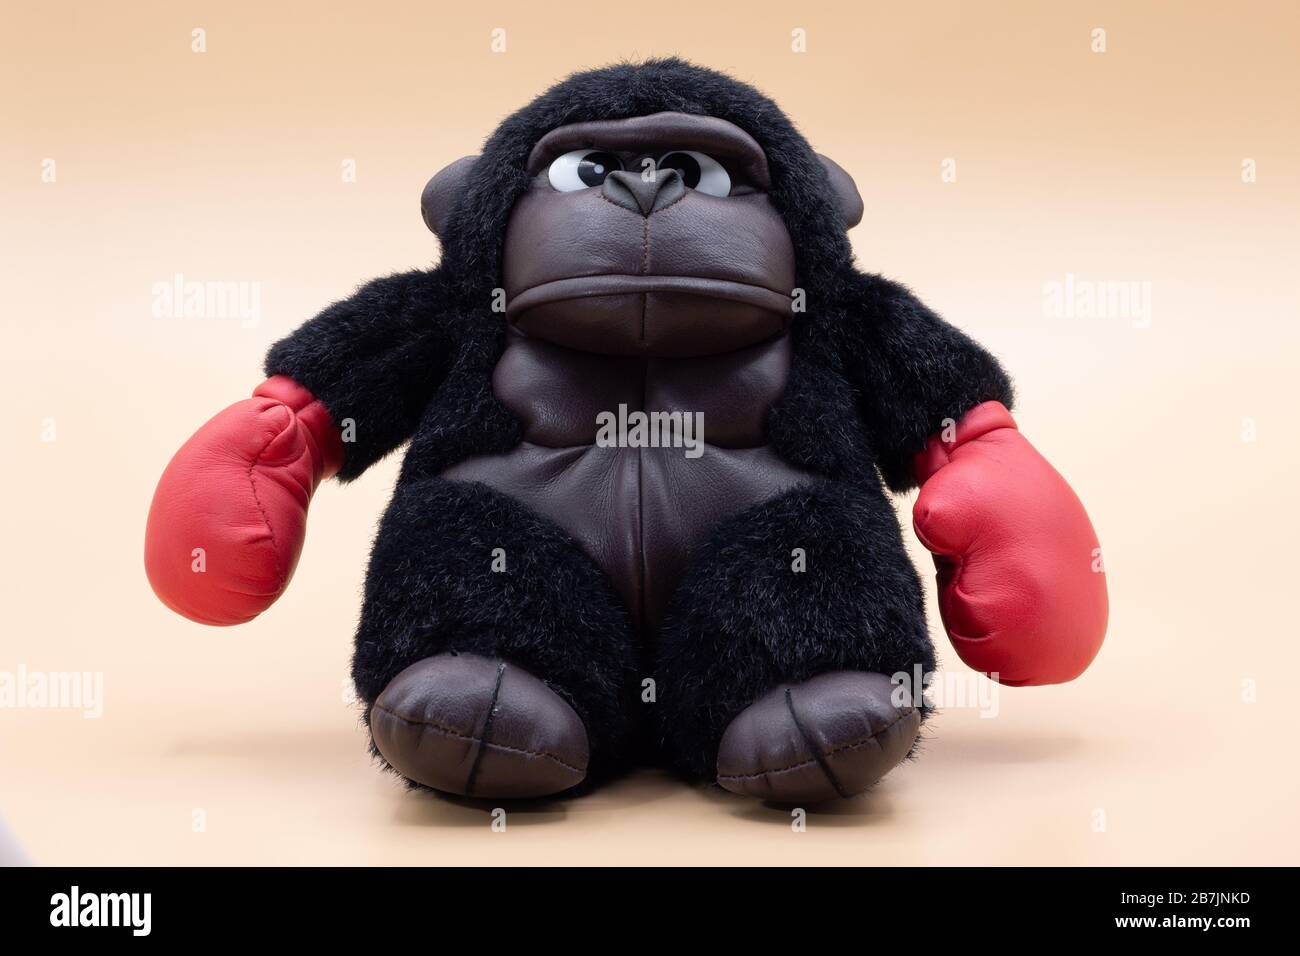 Gorila de juguete fotografías e imágenes de alta resolución - Alamy